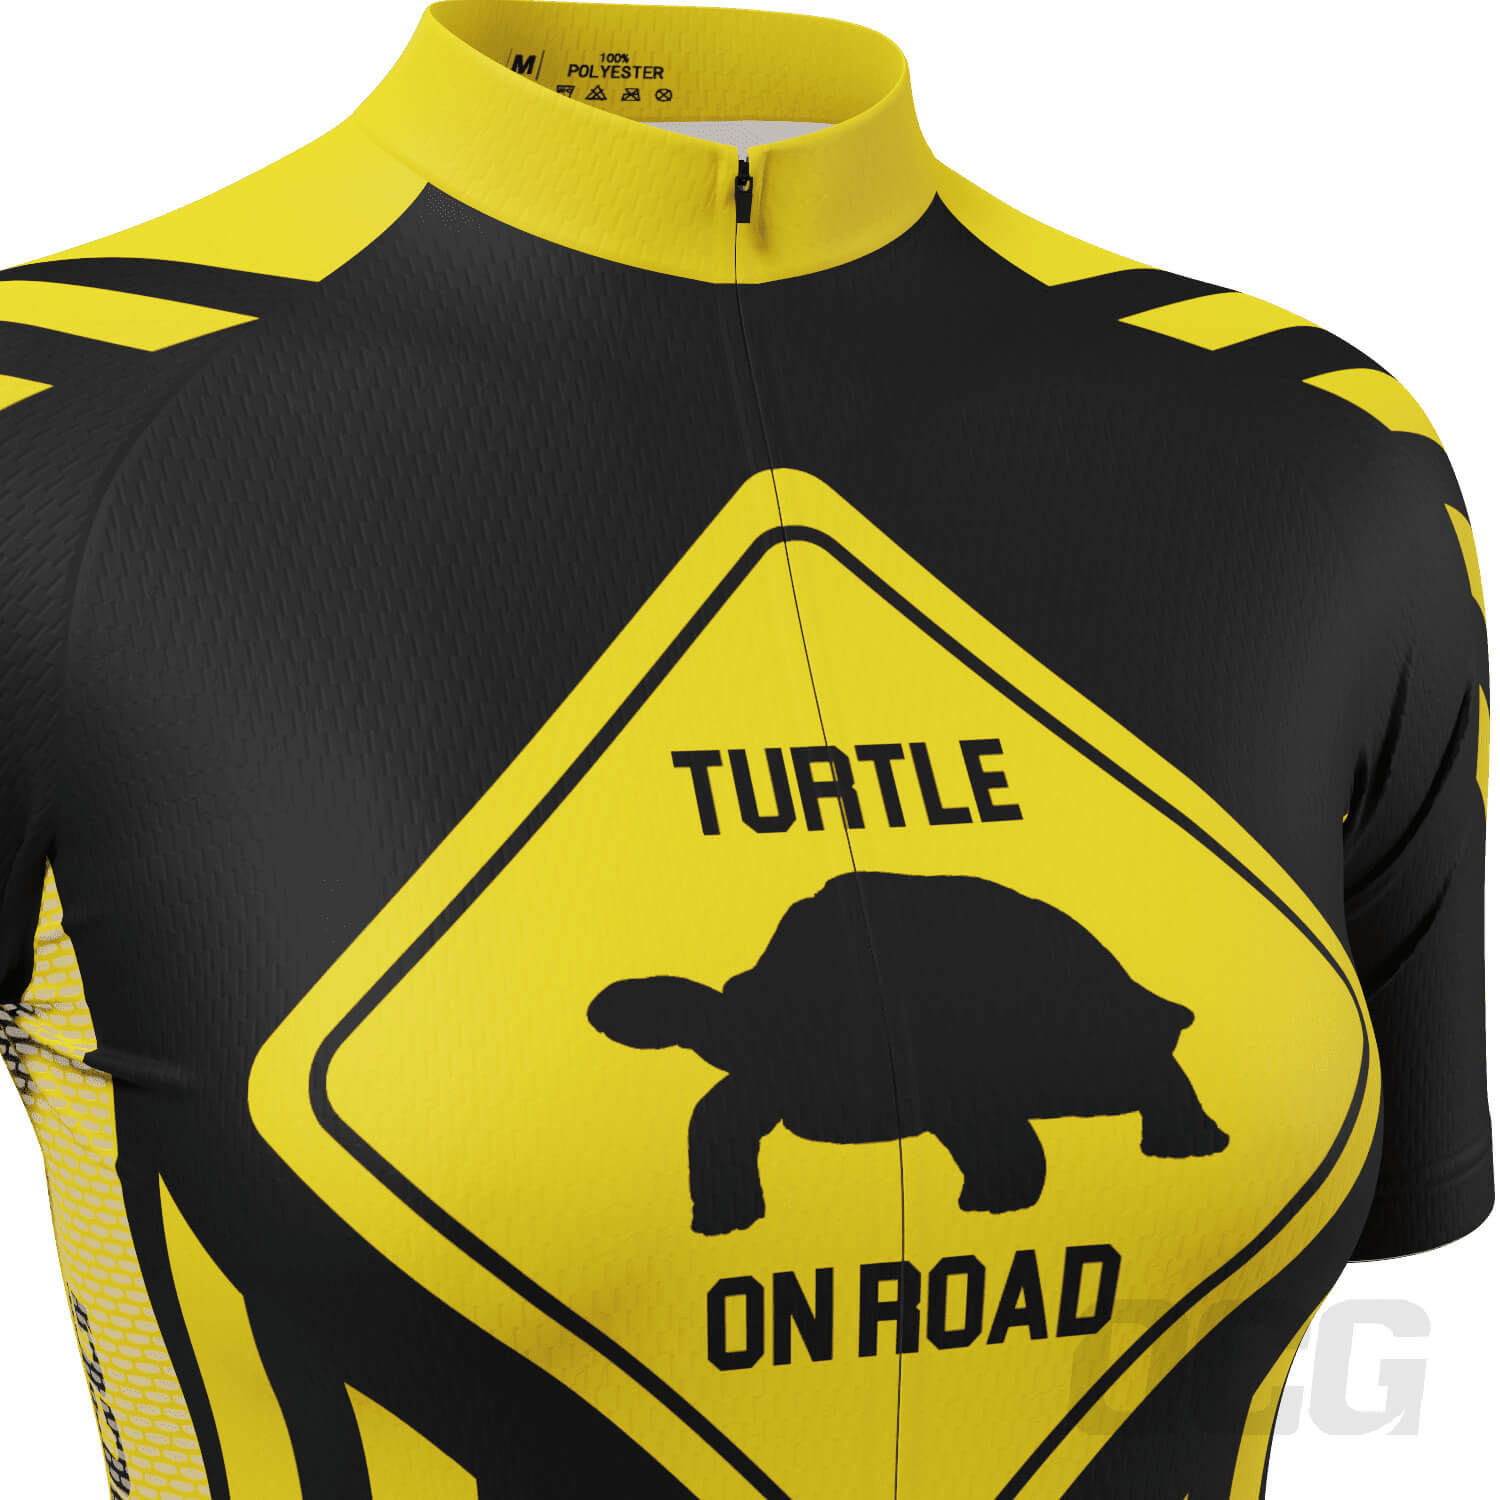 Women's Turtle on Road Short Sleeve Cycling Jersey